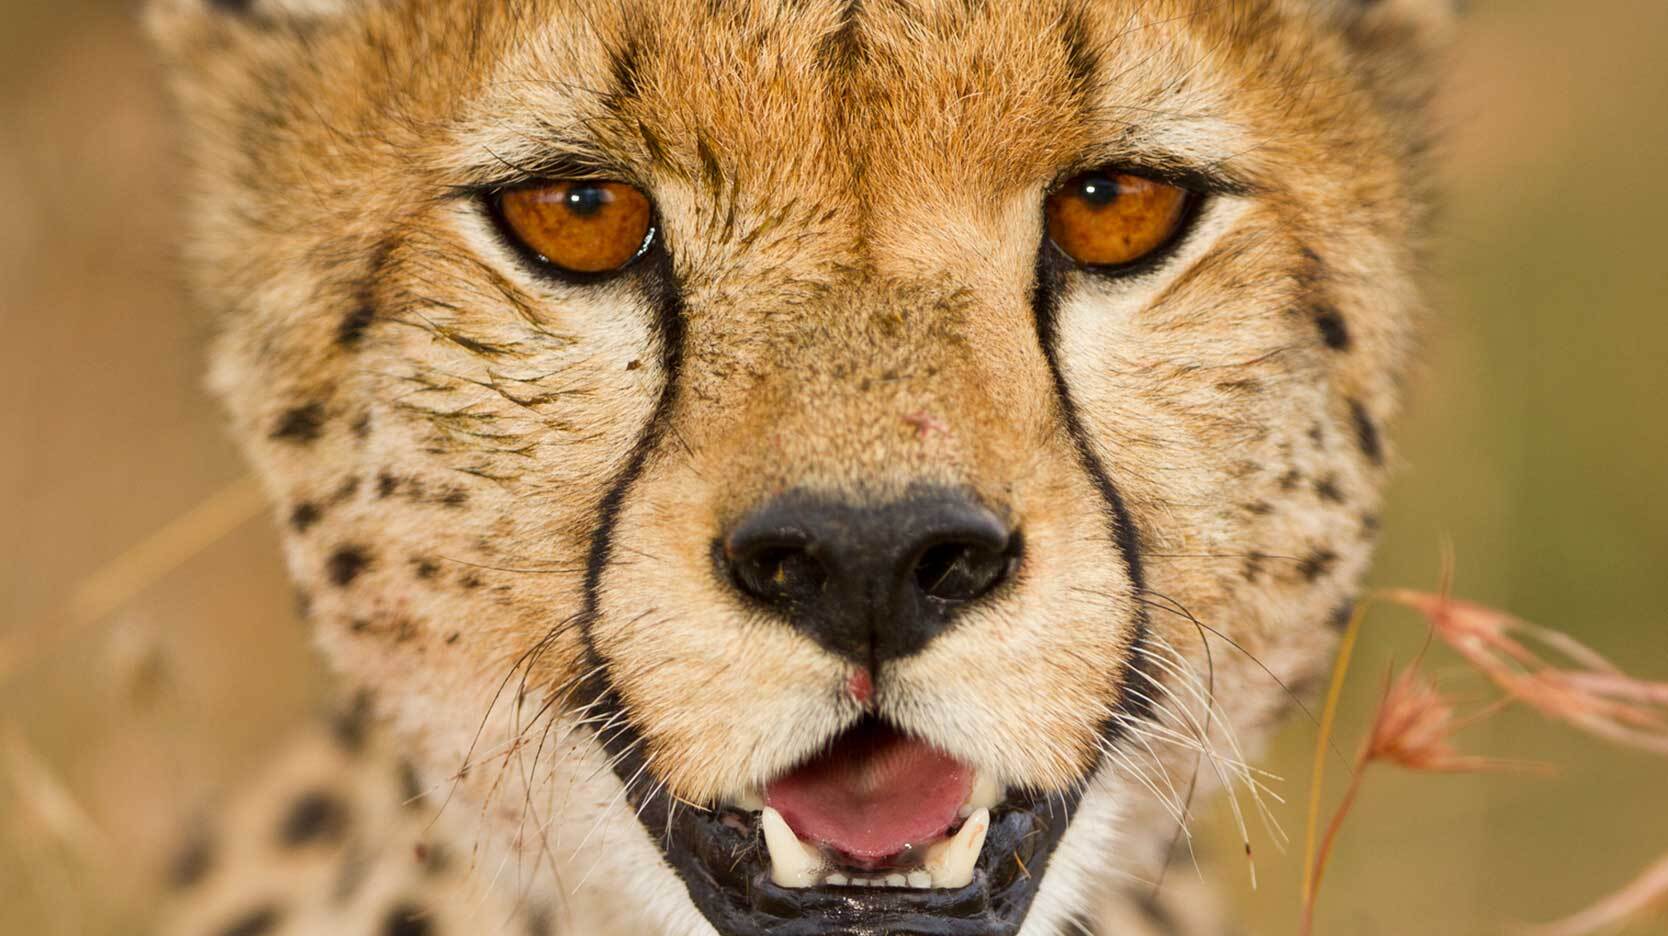 cheetah markings eyes sun protection